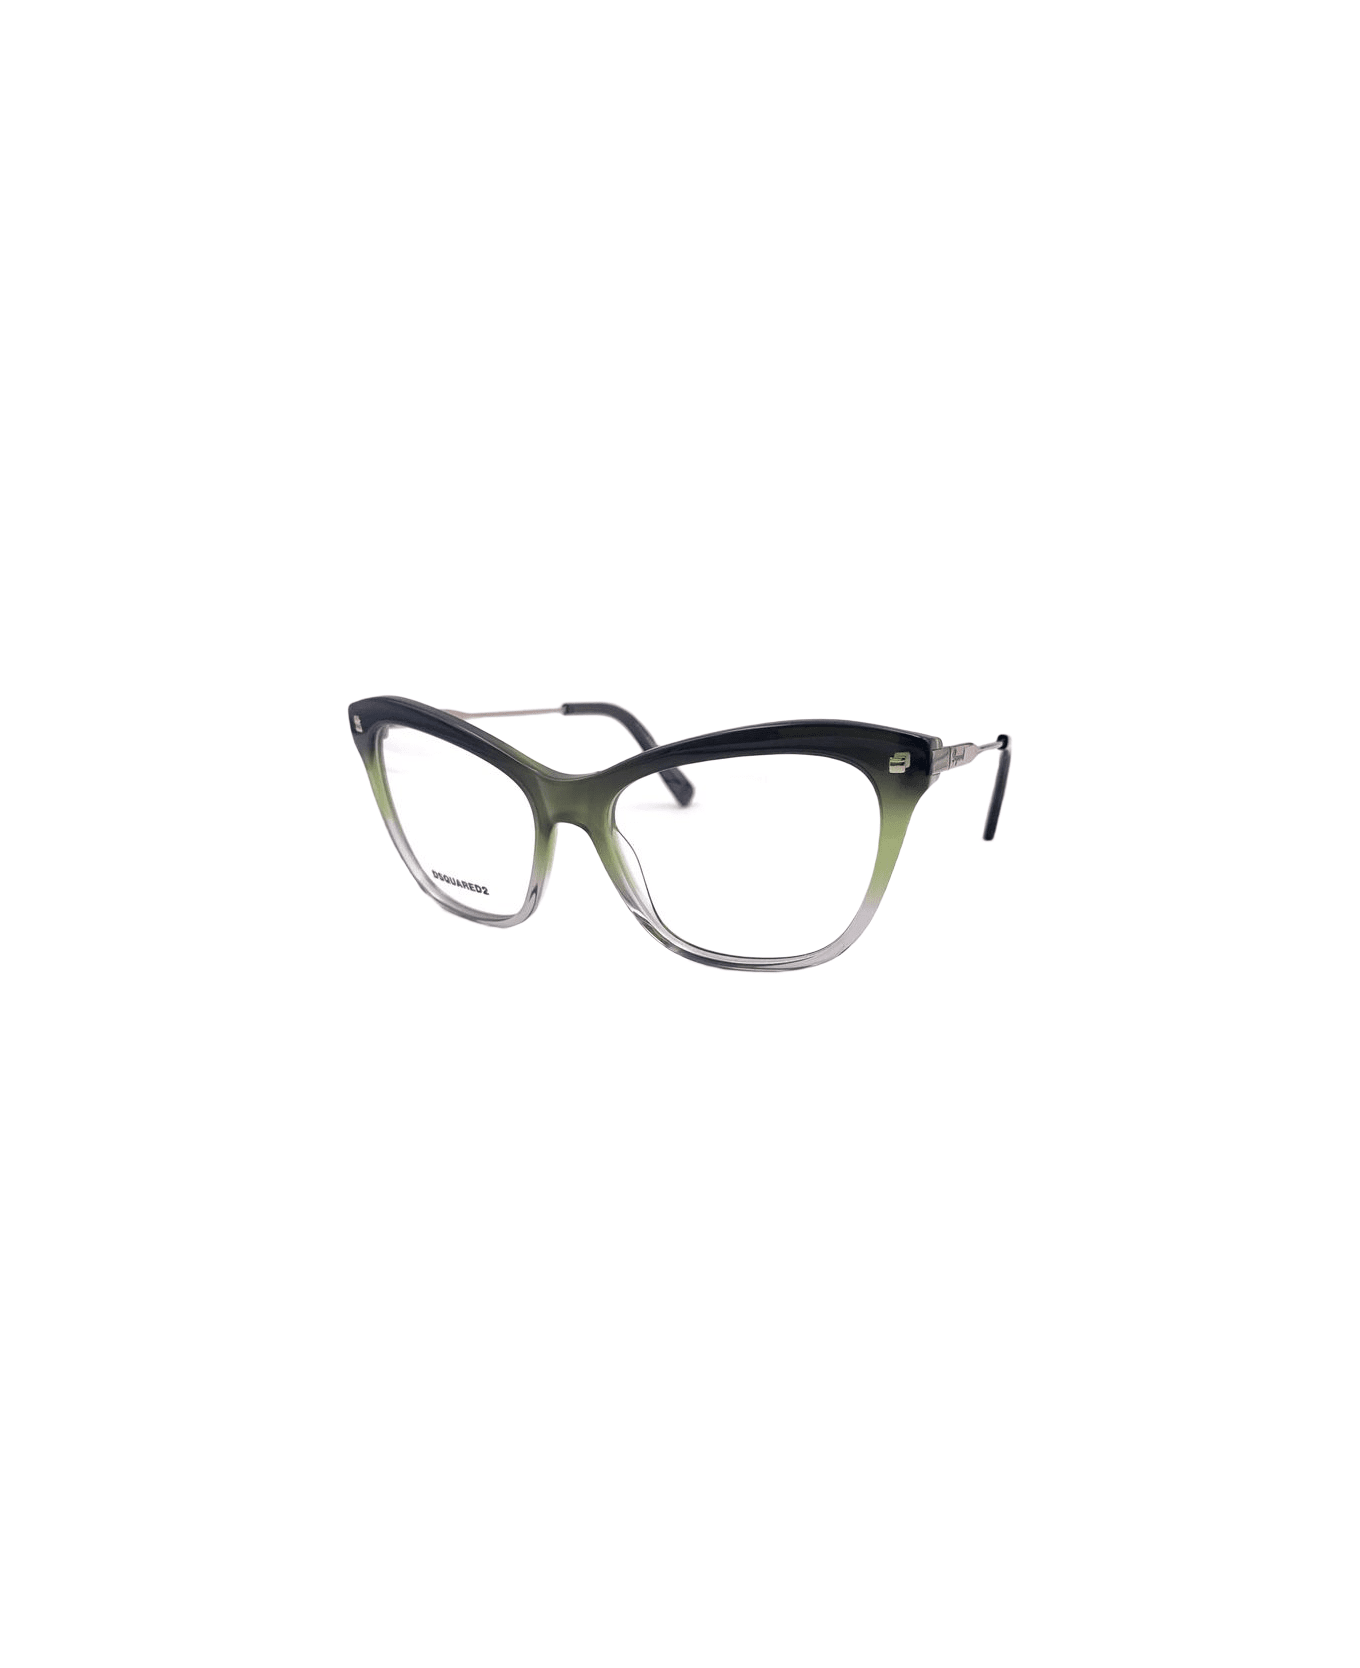 Dsquared2 Eyewear Dq5194 Glasses - Multicolore アイウェア